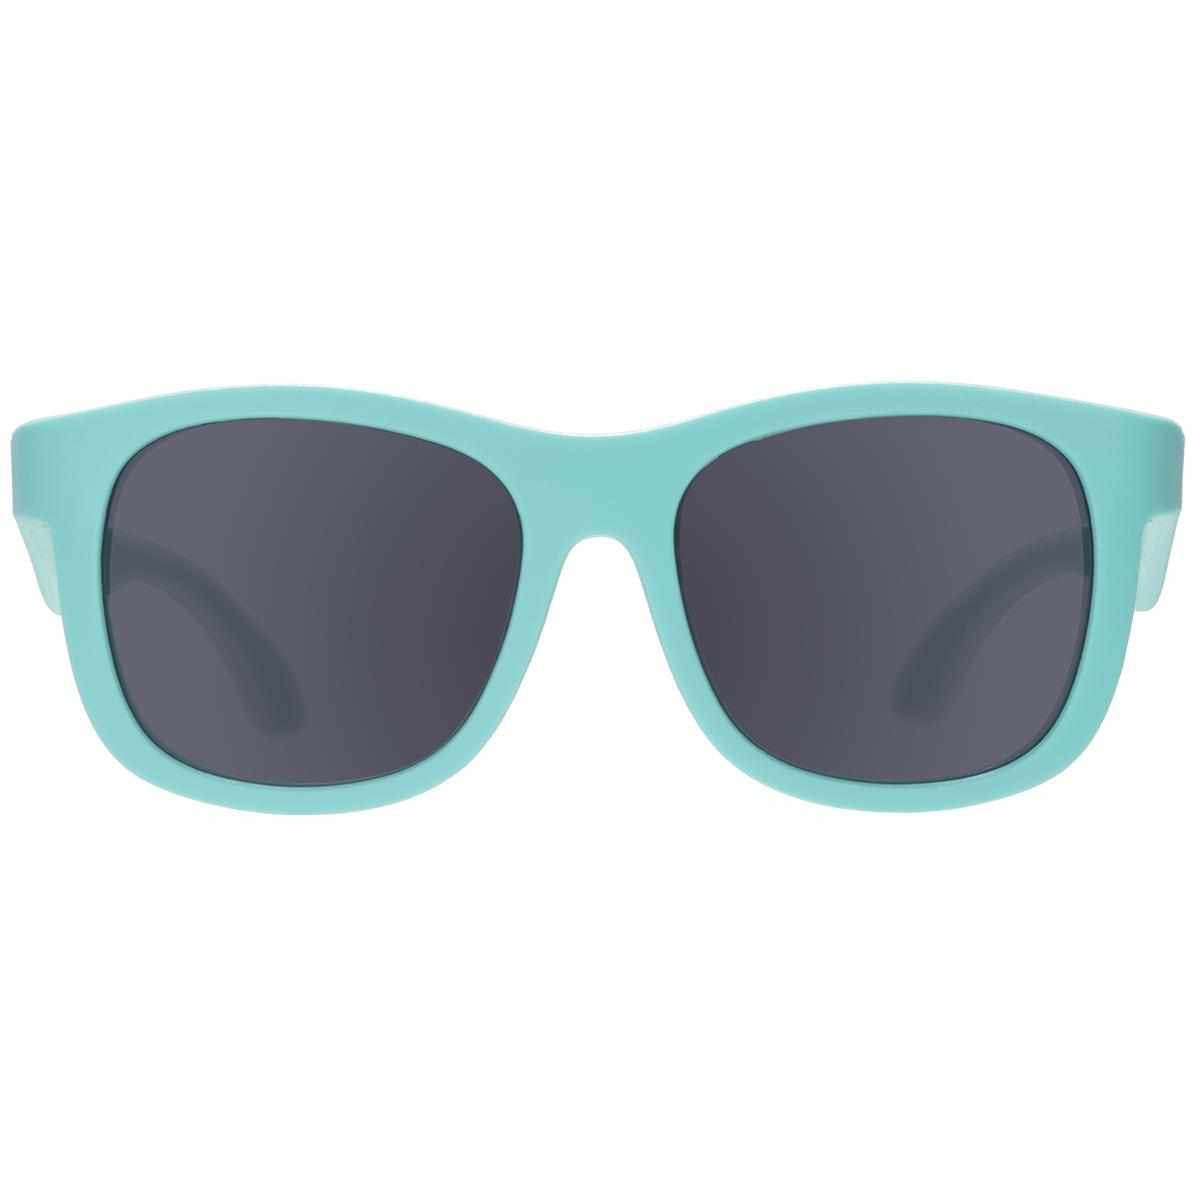 Totally Turquoise Navigator Sunglasses-Babiators-Lasting Impressions